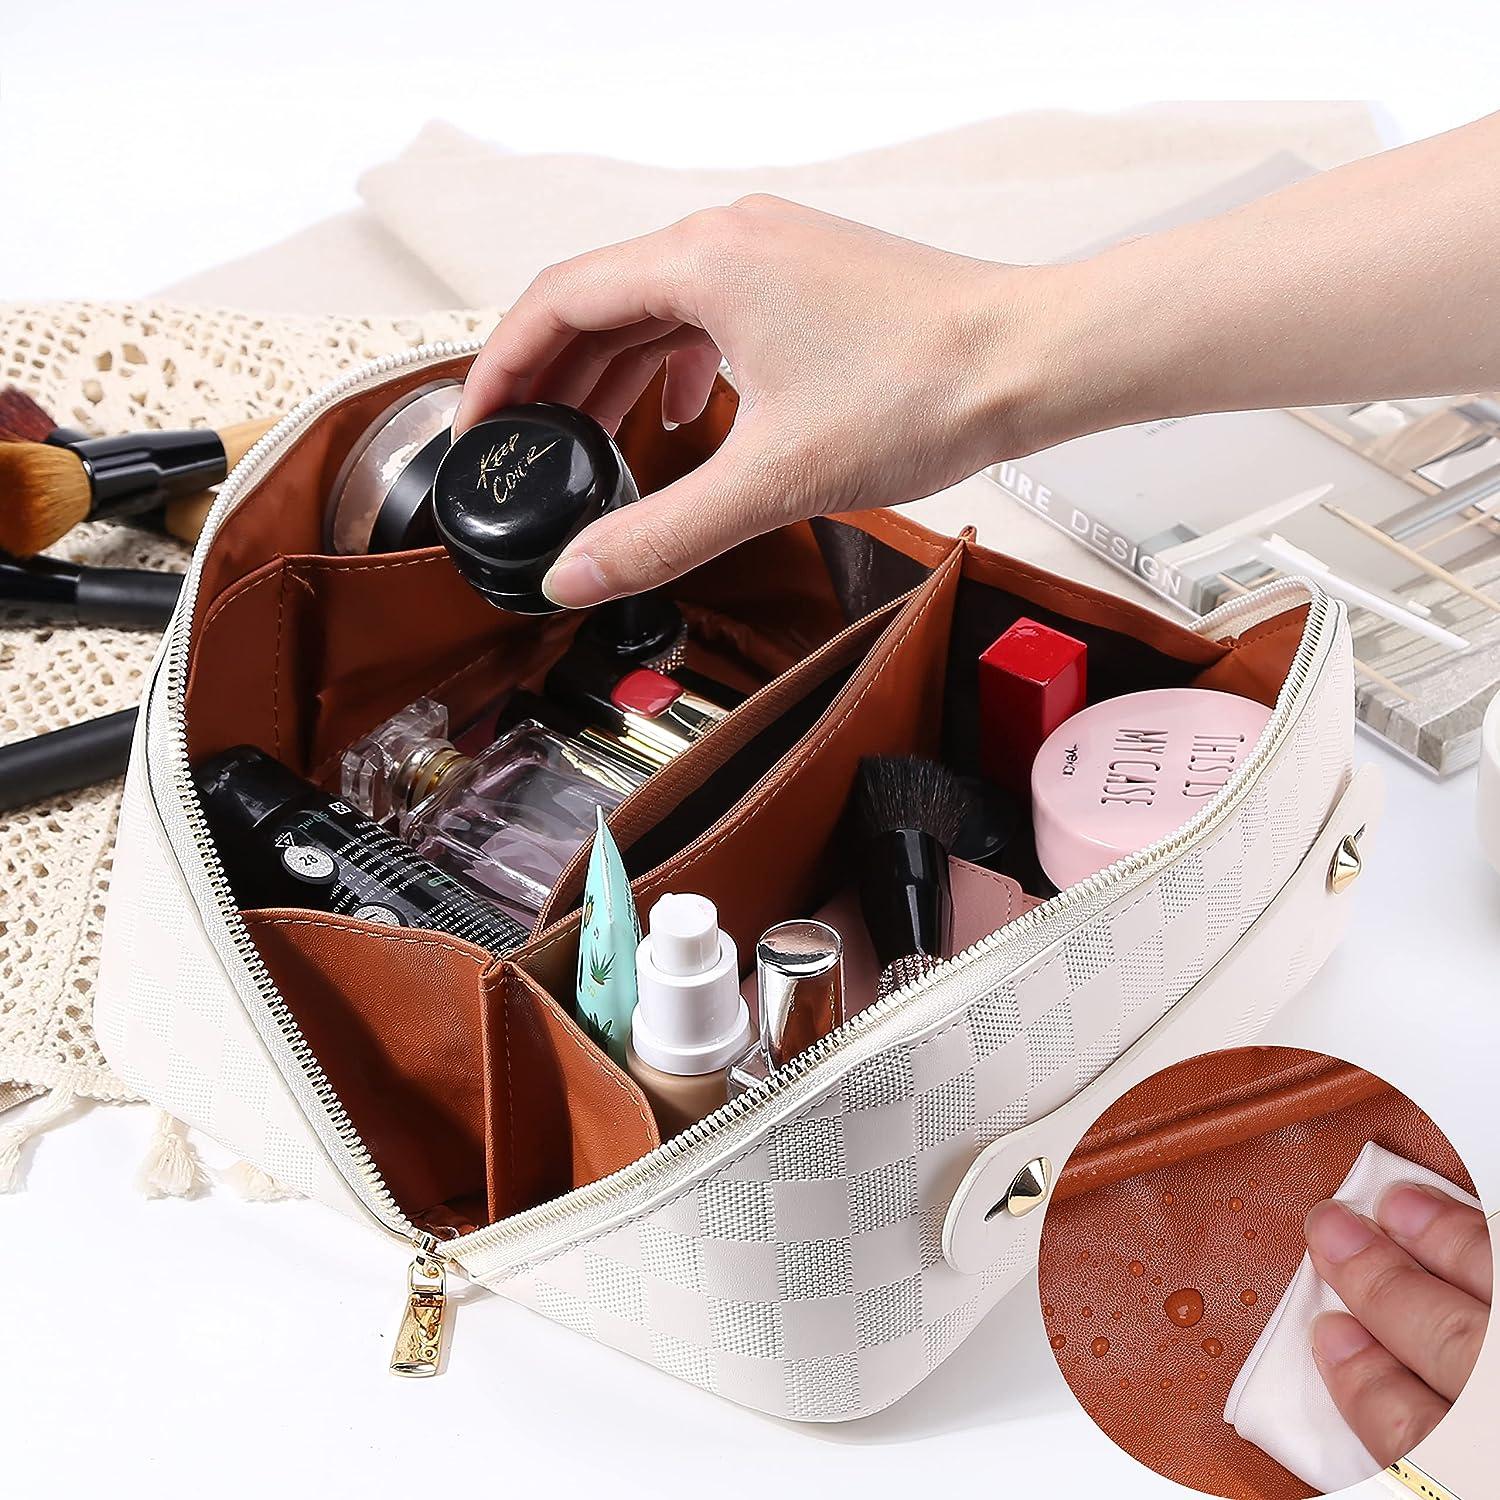  WIRIBEY Checkered Makeup Bag, Portable Bag with